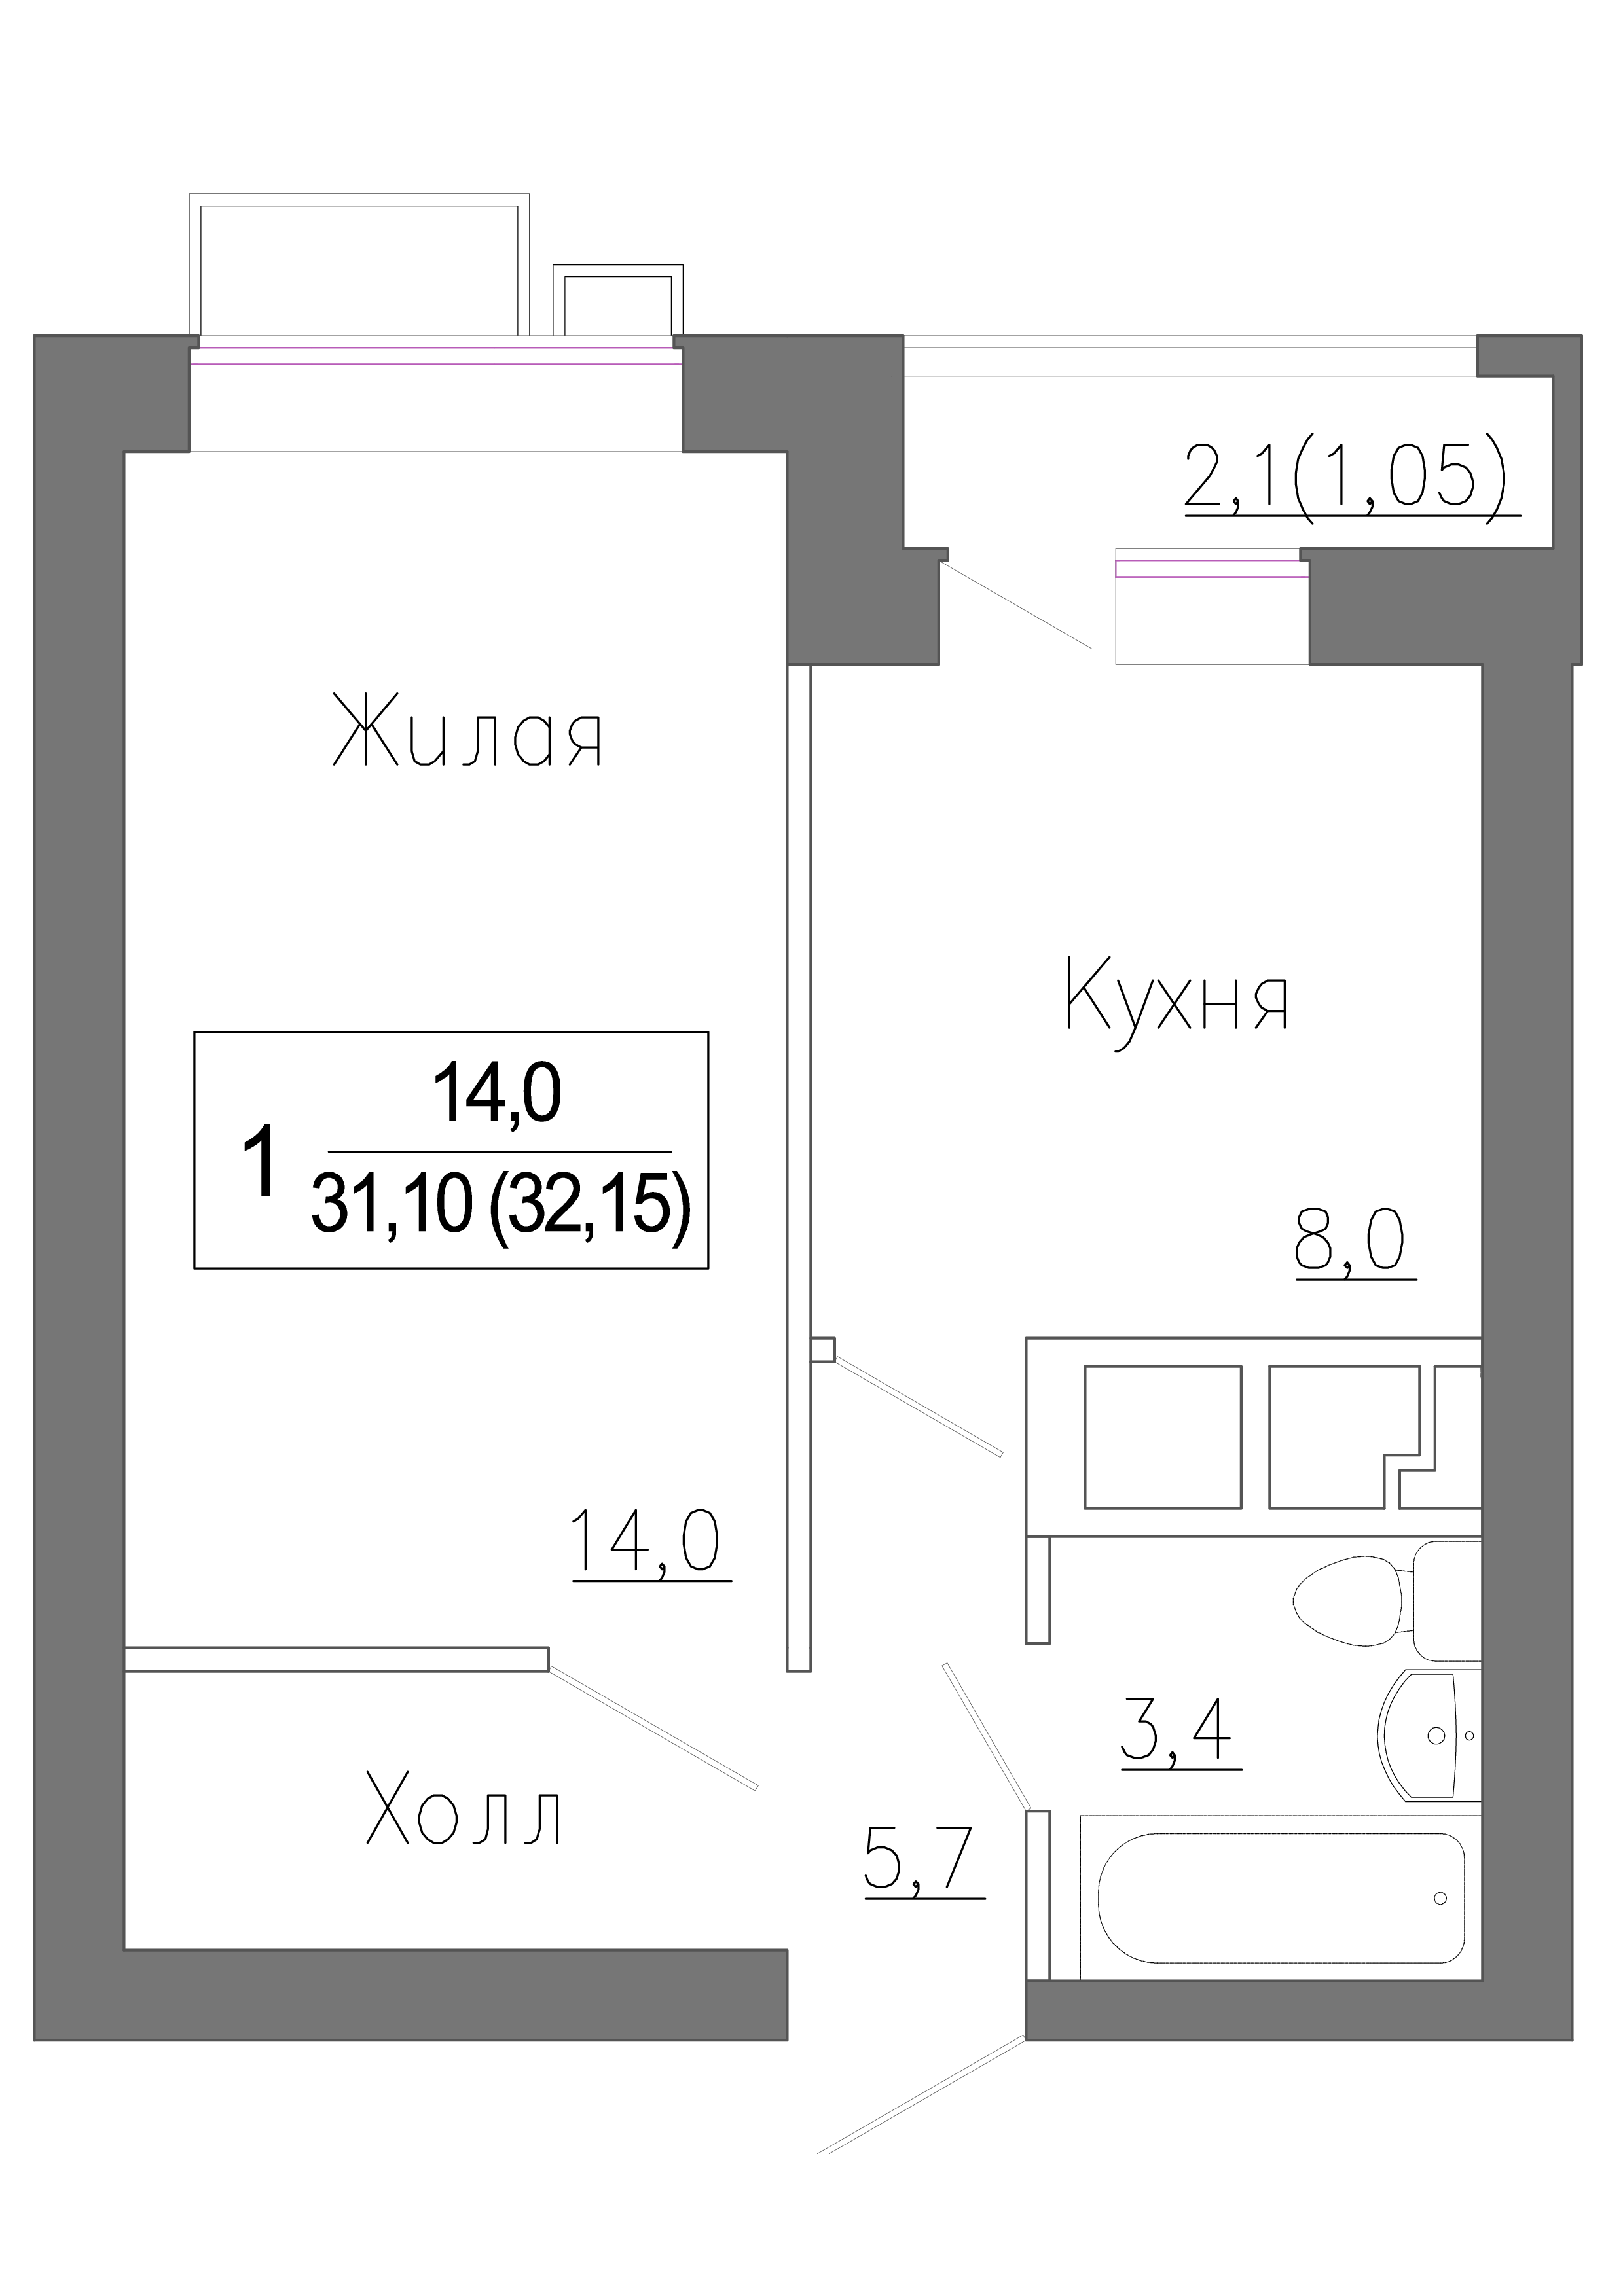 1 комн. квартира, 32.1 м², 4 этаж 